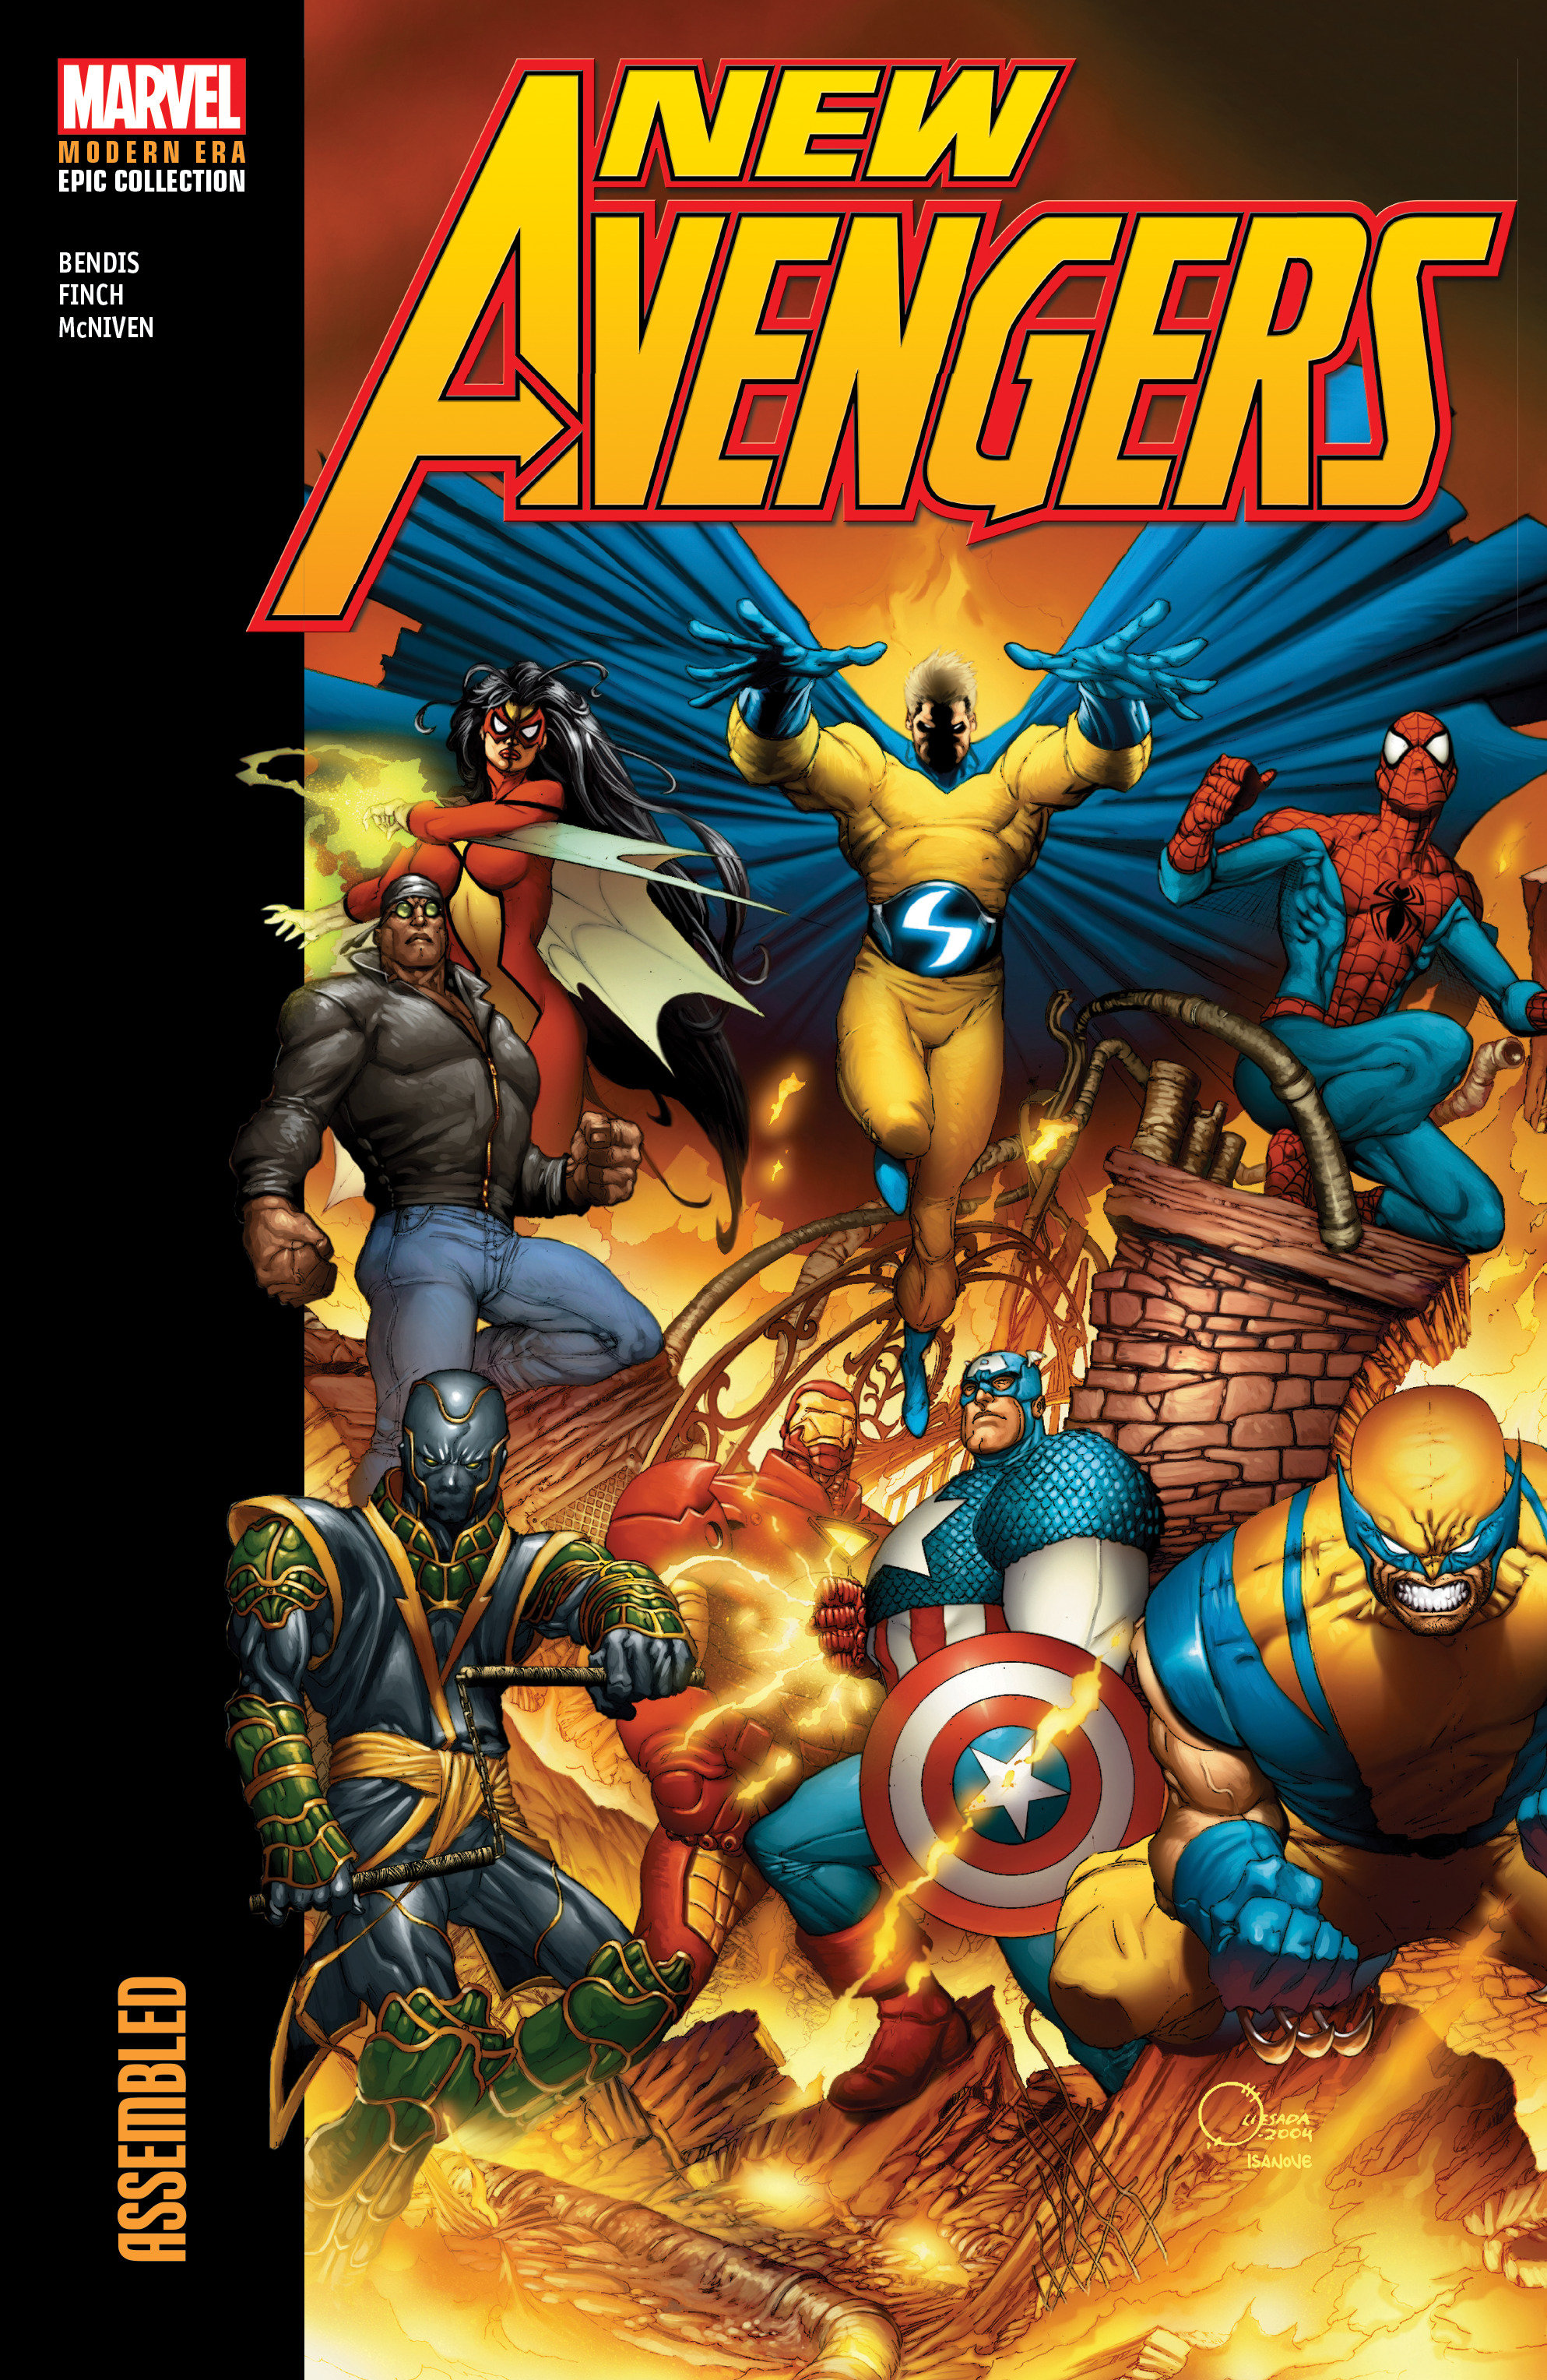 New Avengers Modern Era Epic Collection Graphic Novel Volume 1 Assembled